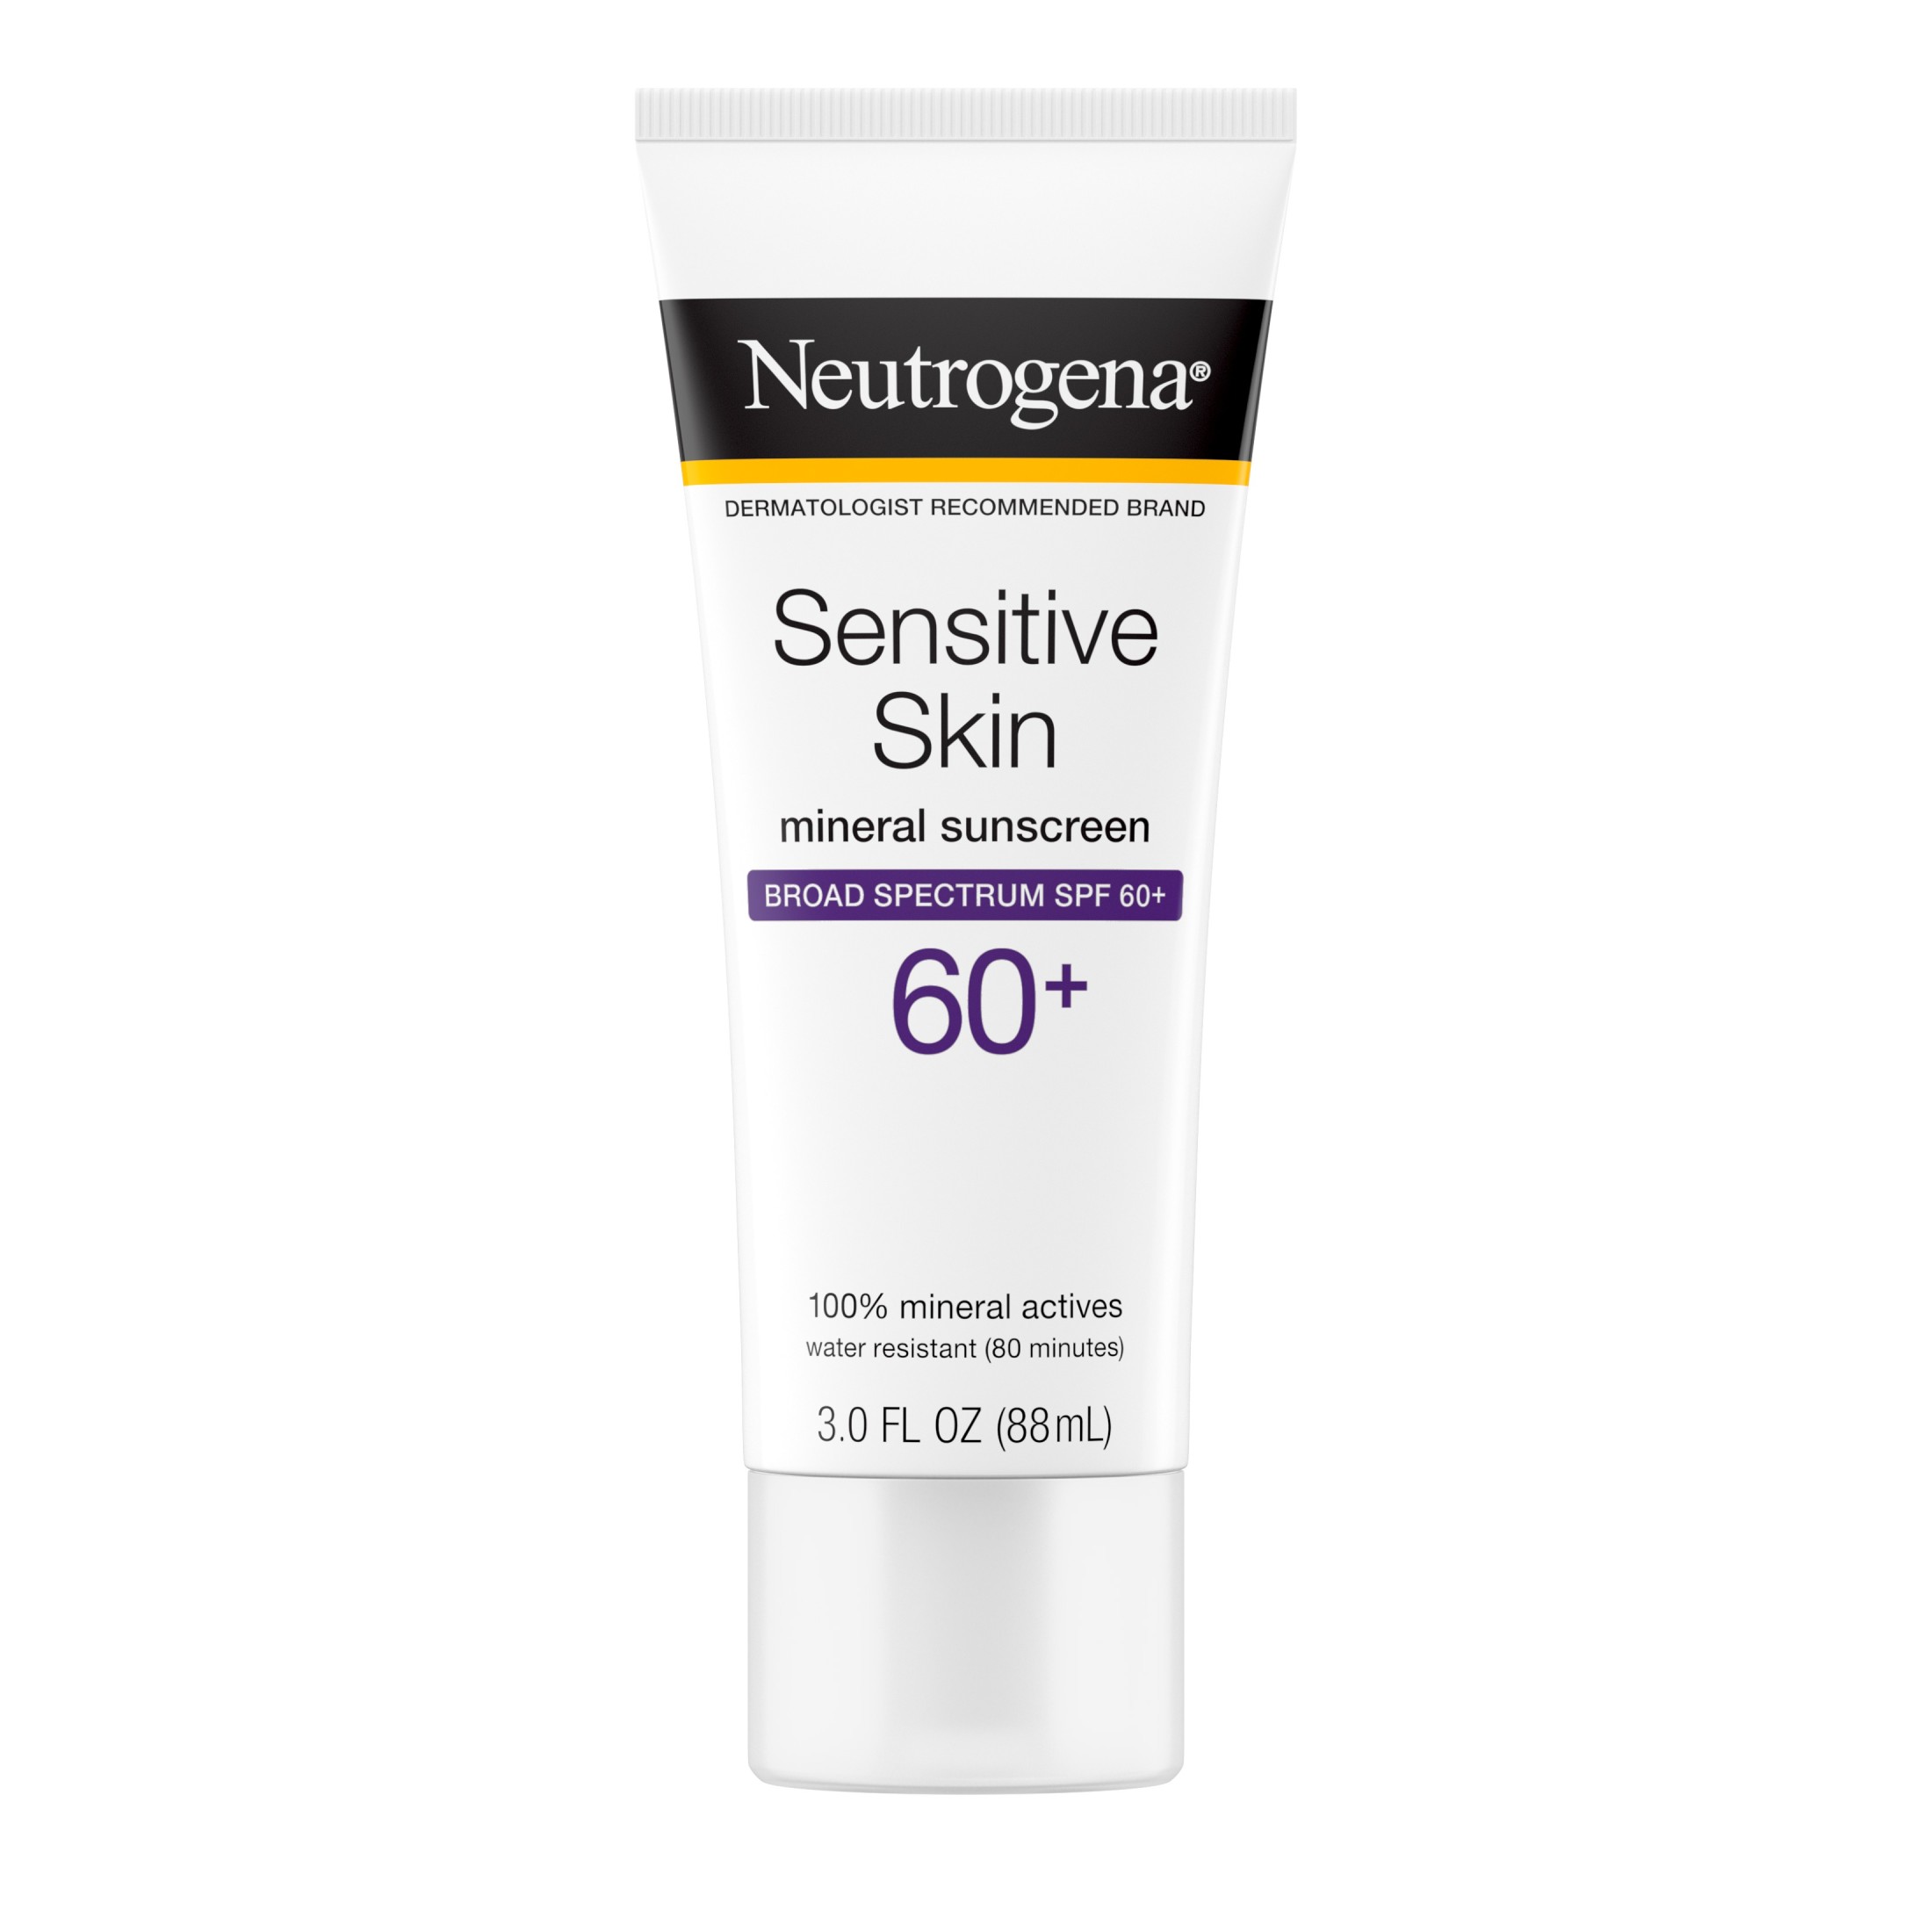 Neutrogena Sensitive Skin Mineral Sunscreen Lotion, SPF 60+, 3 fl. oz - image 1 of 16